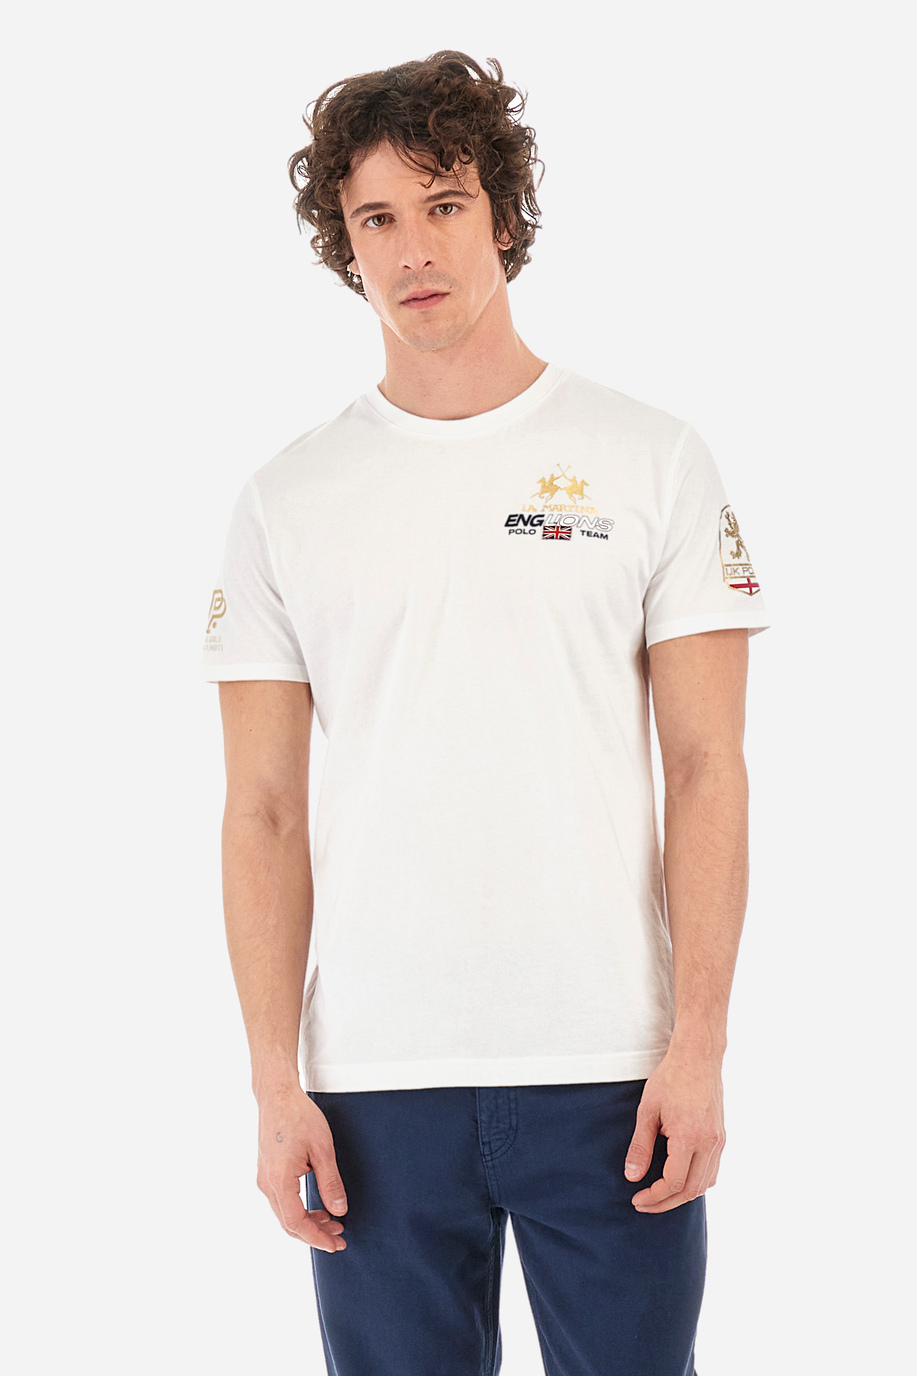 T-Shirt aus Baumwolle Regular Fit - Yvon - Polo Player | La Martina - Official Online Shop